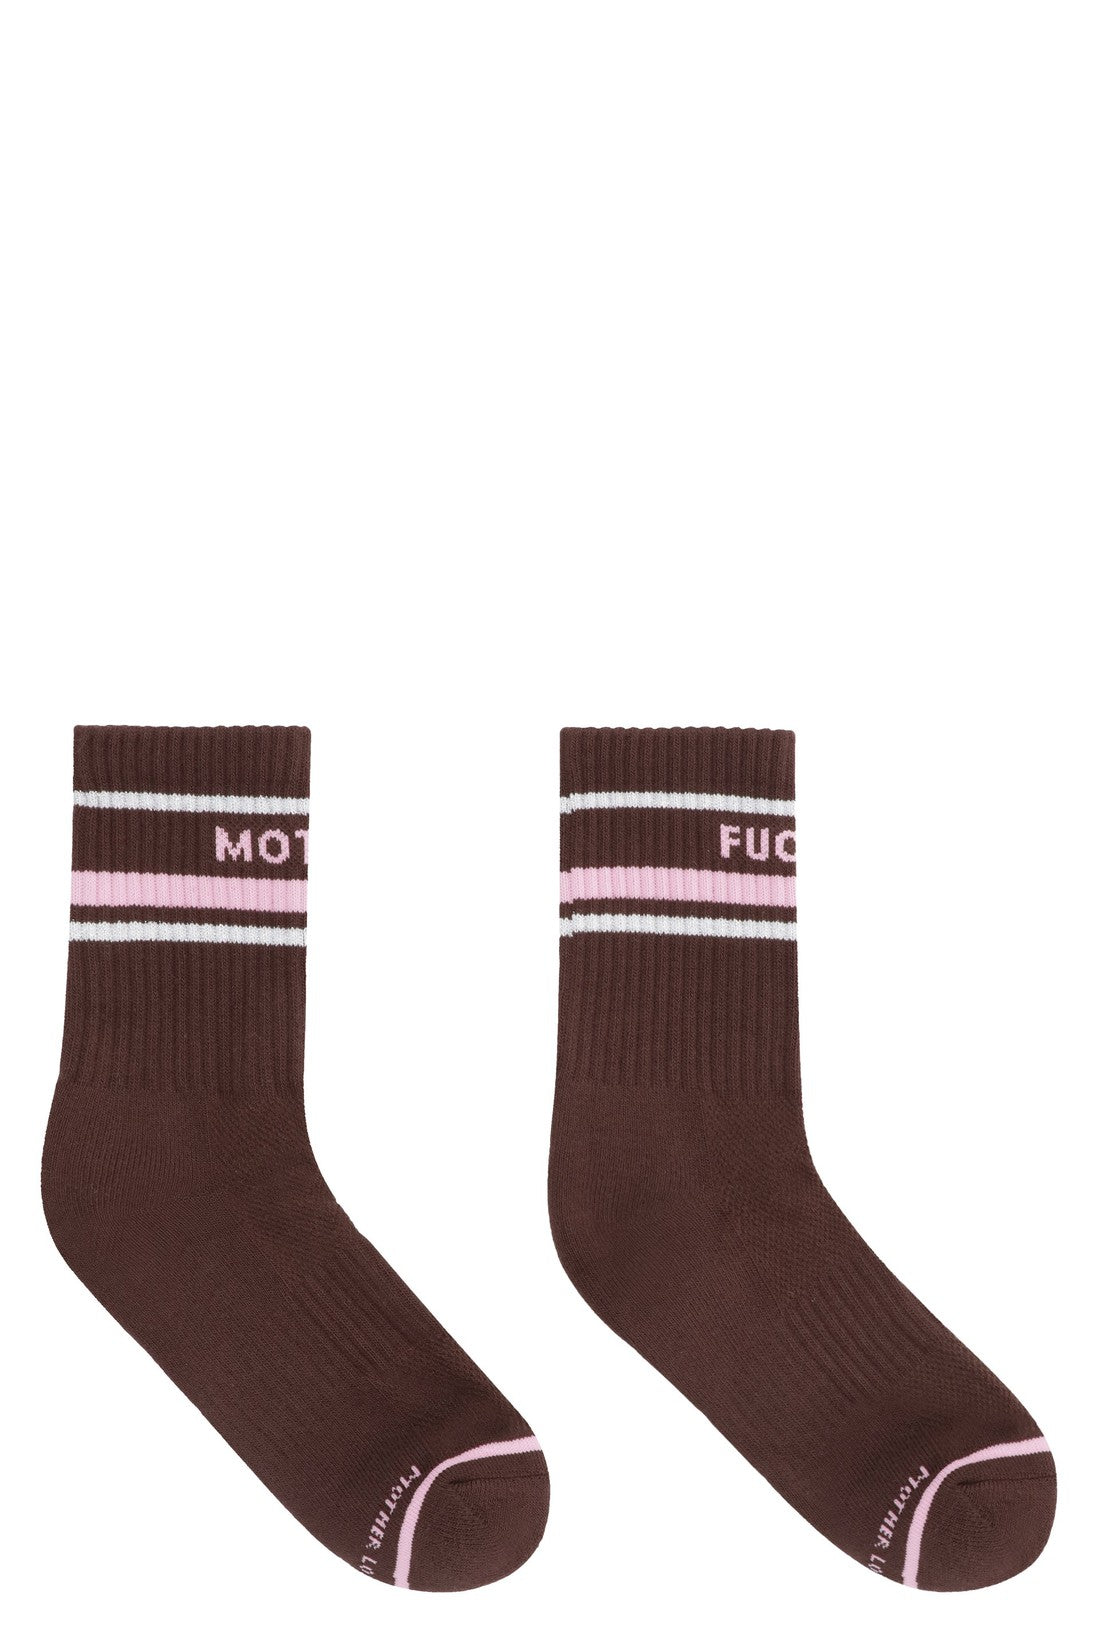 Mother-OUTLET-SALE-Logo cotton blend socks-ARCHIVIST